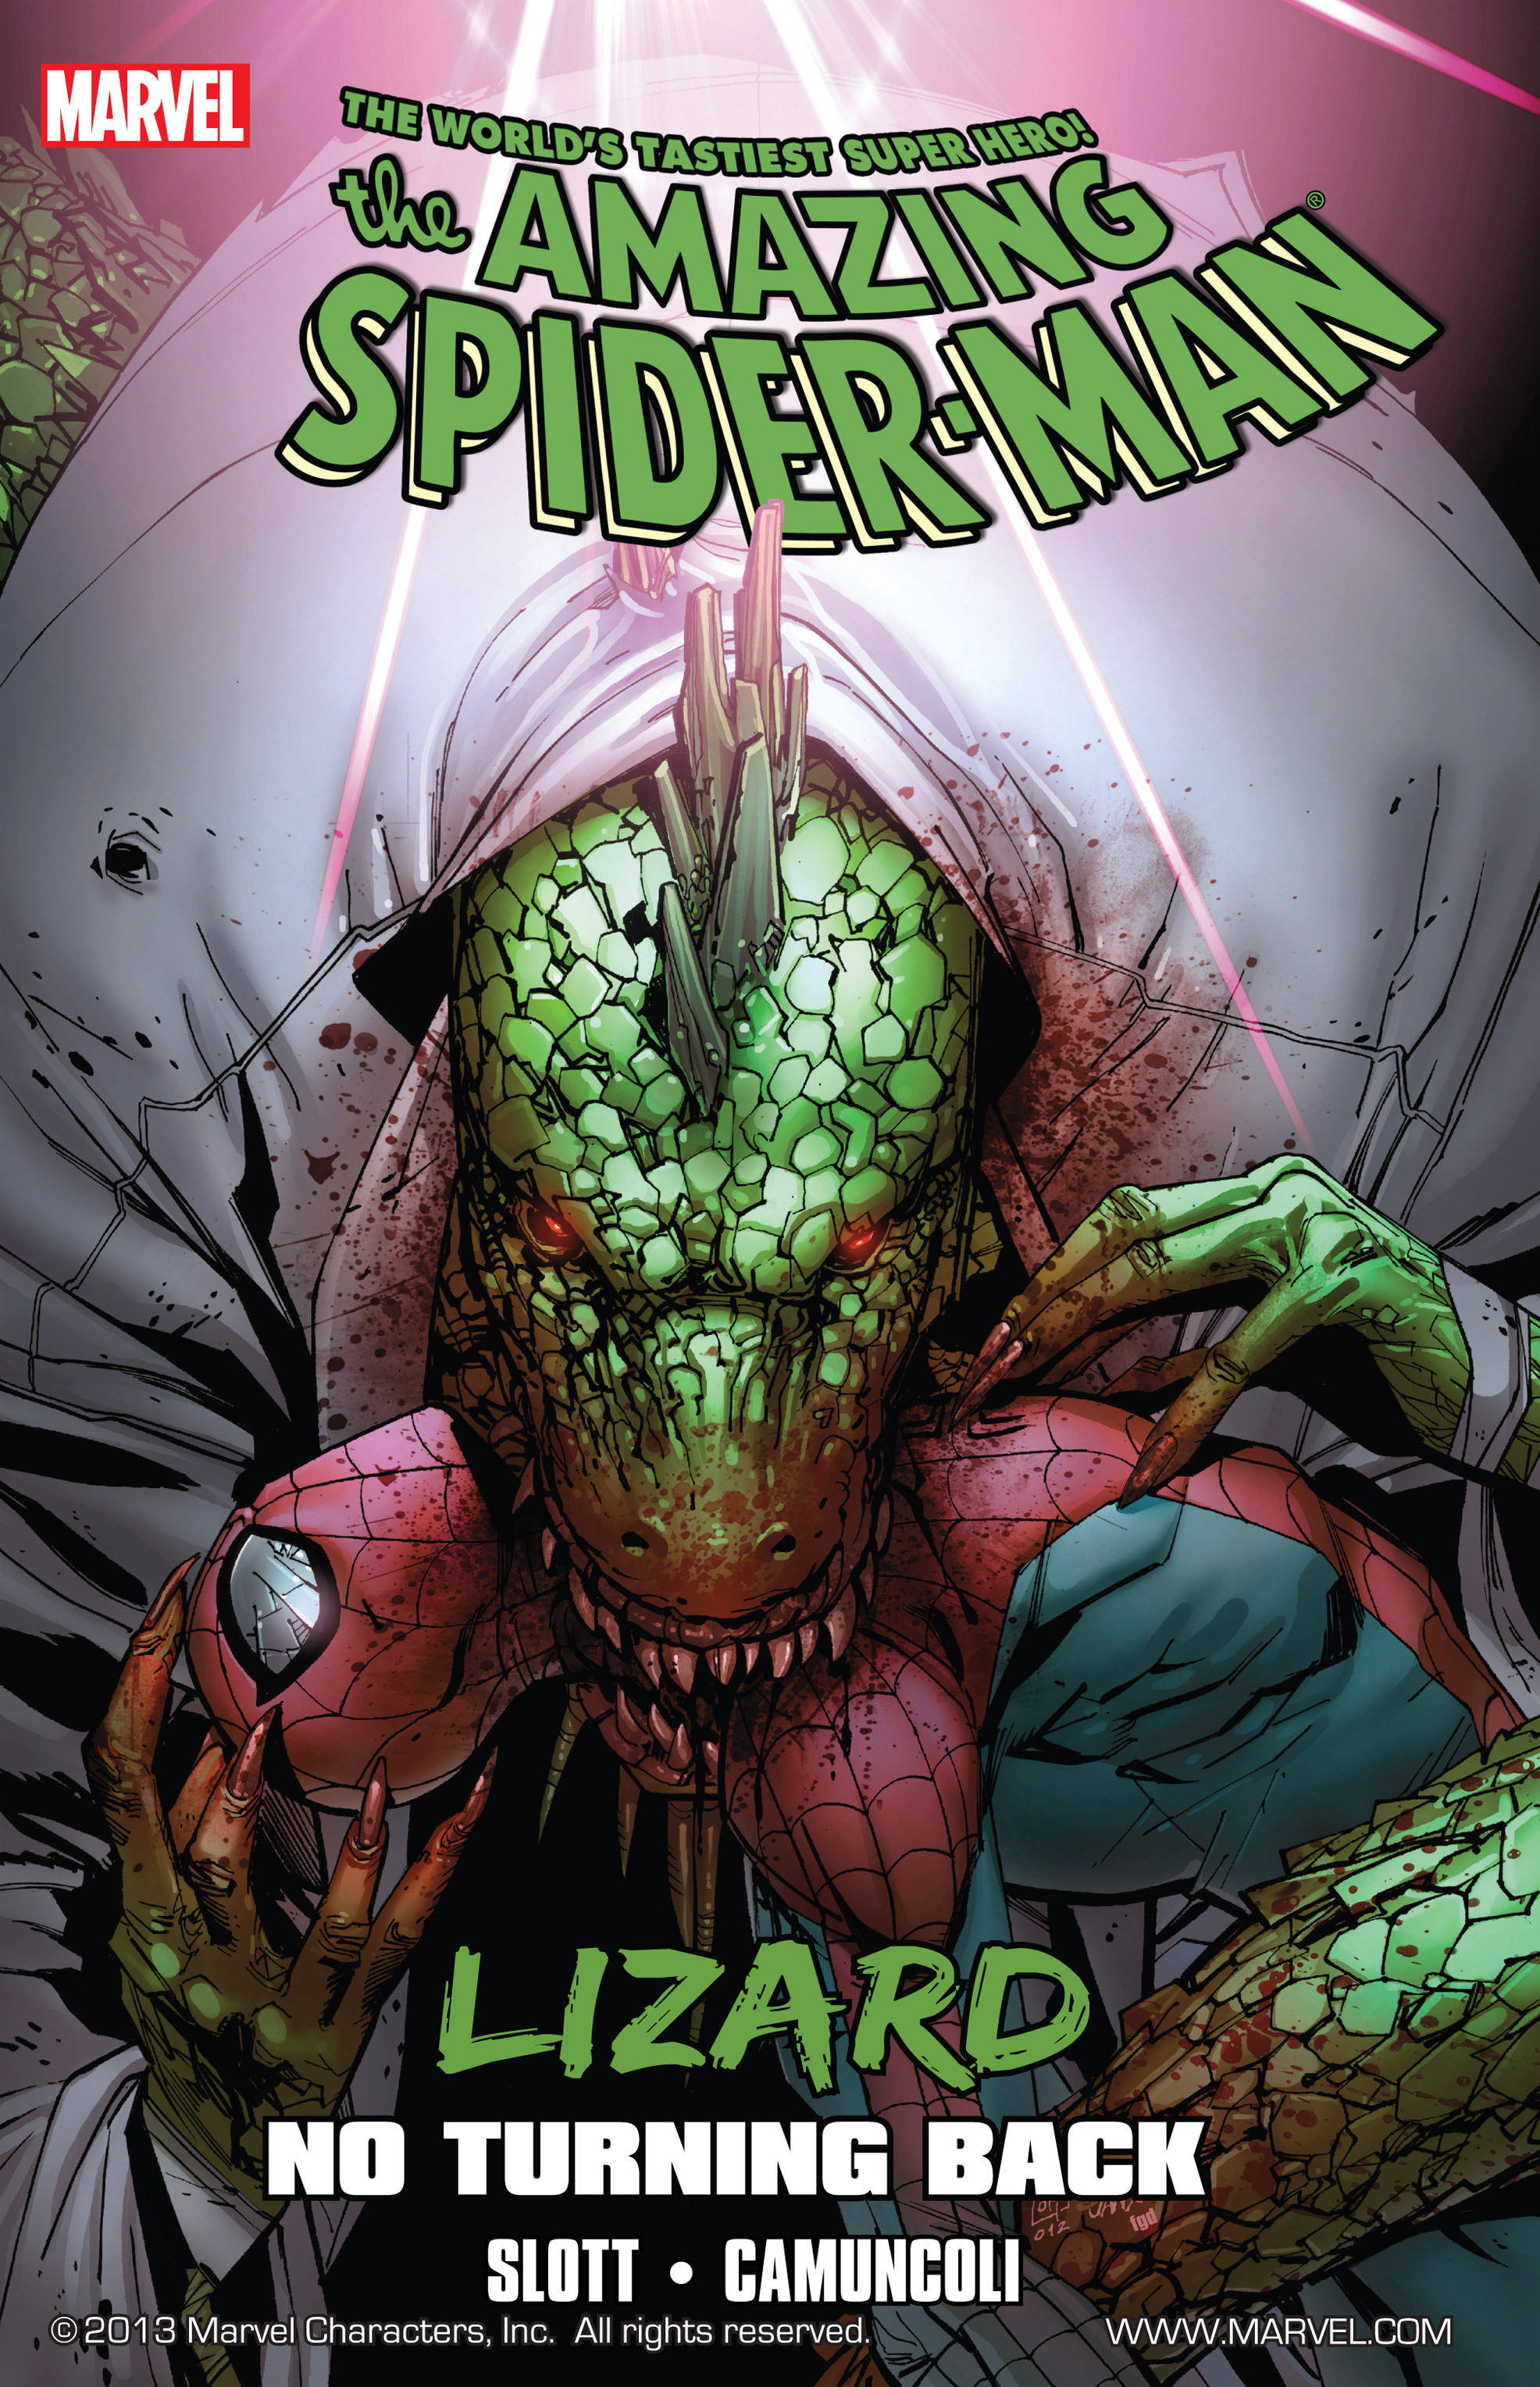 Spider-Man - Lizard - No Turning Back #1